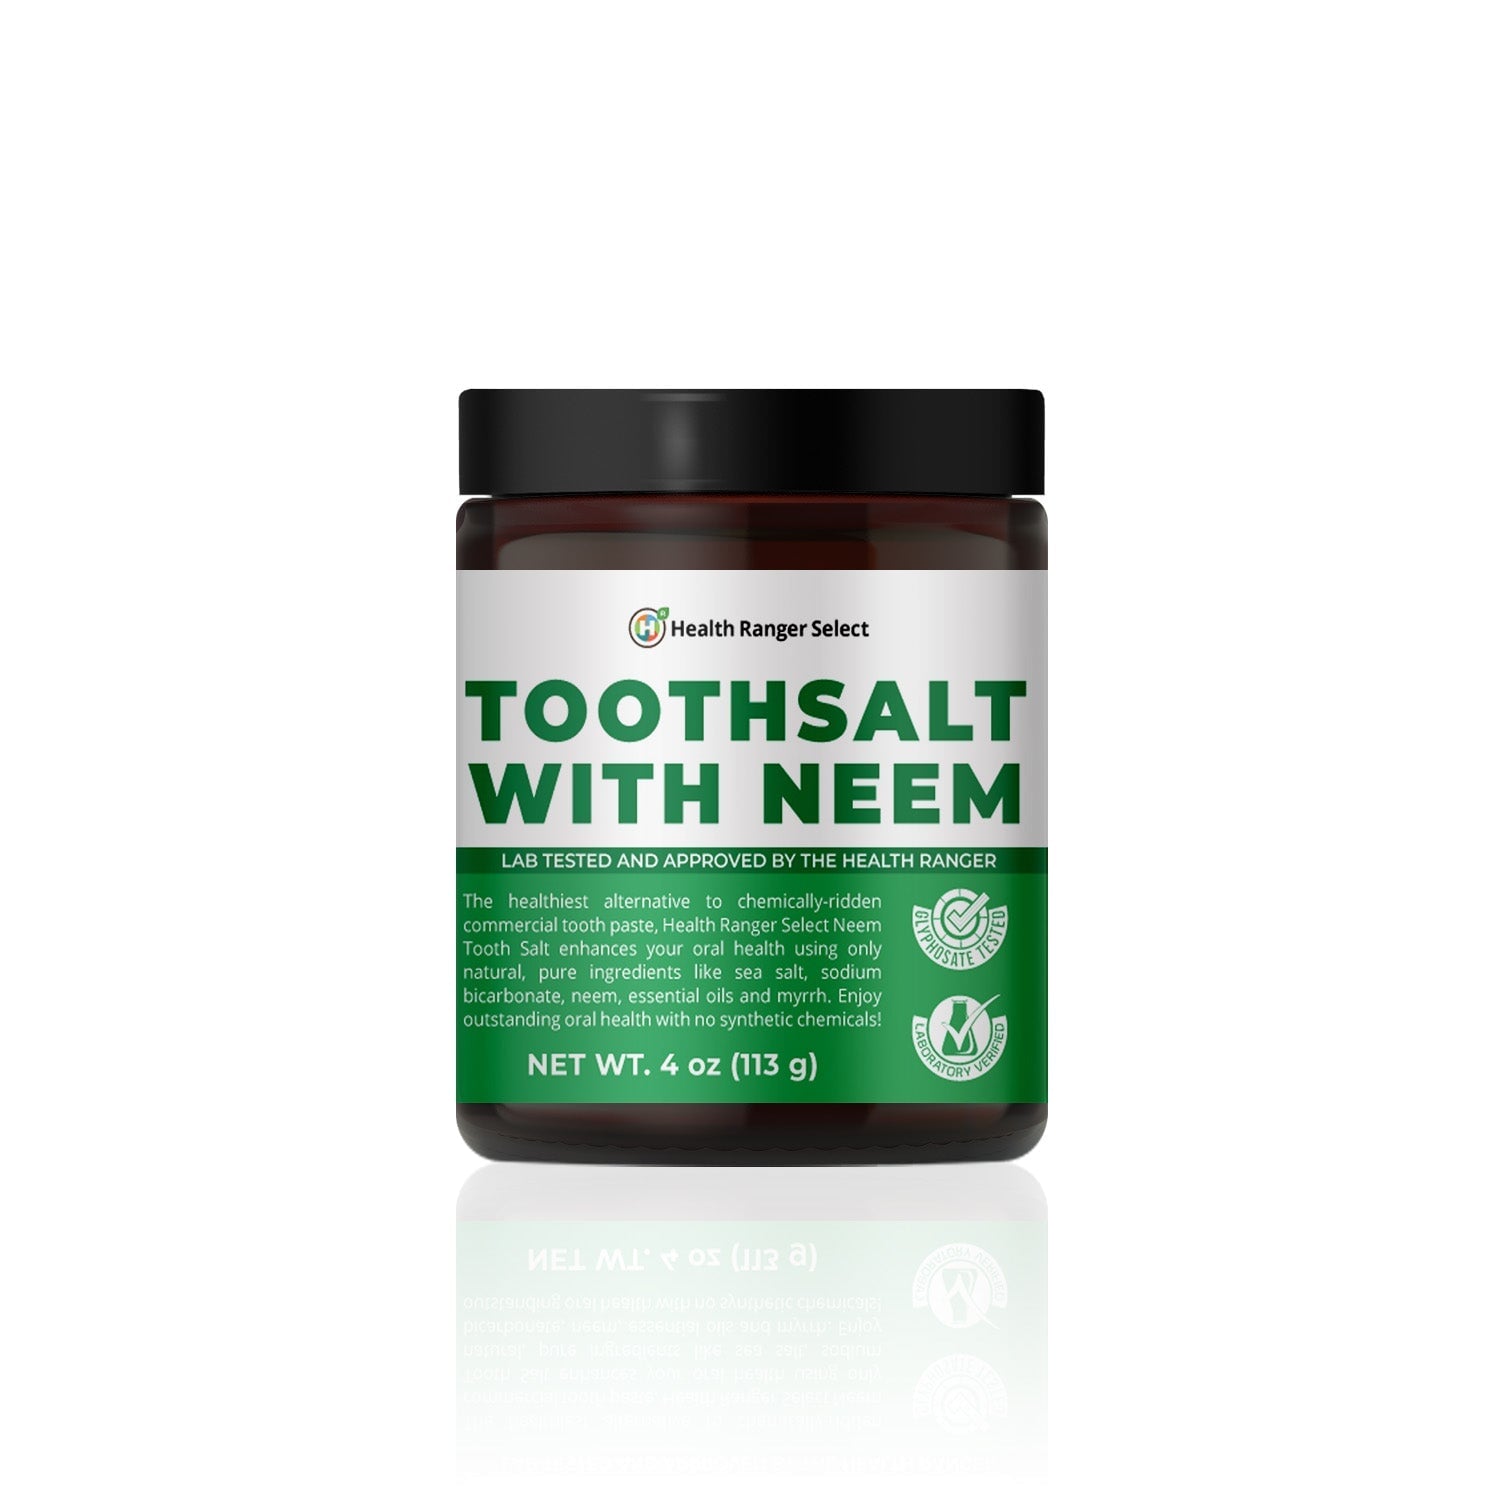 Health Ranger Select Toothsalt with Neem 4 oz (113g) Brighteon Store 